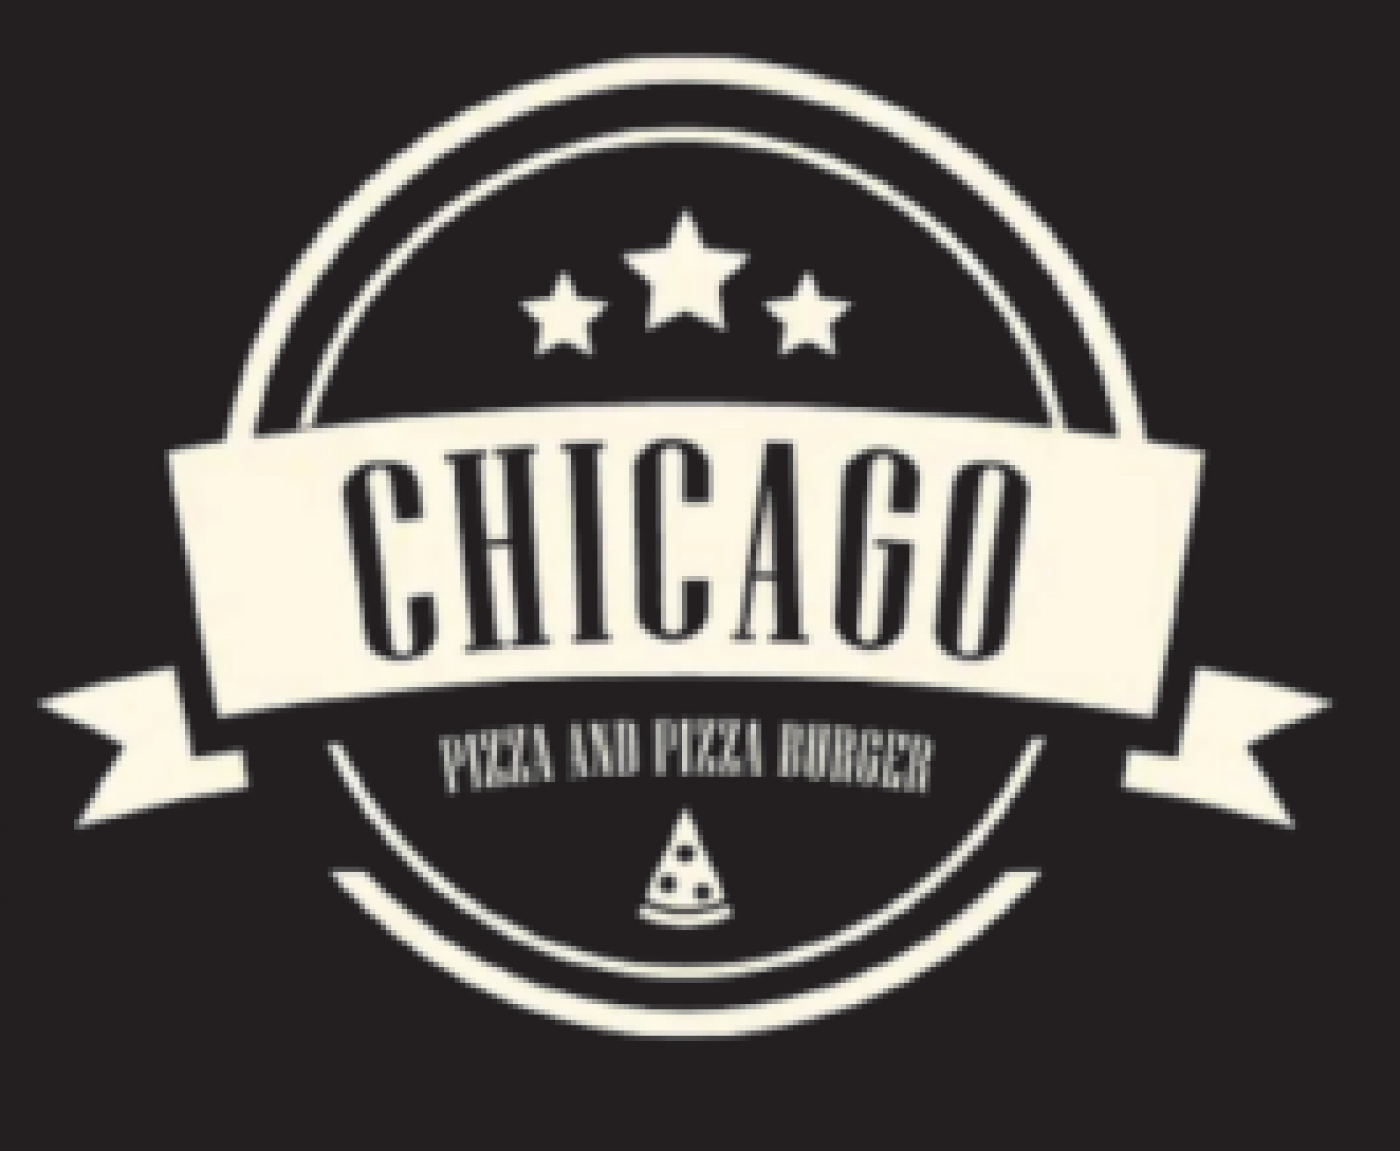 Chicago Pizza Burger